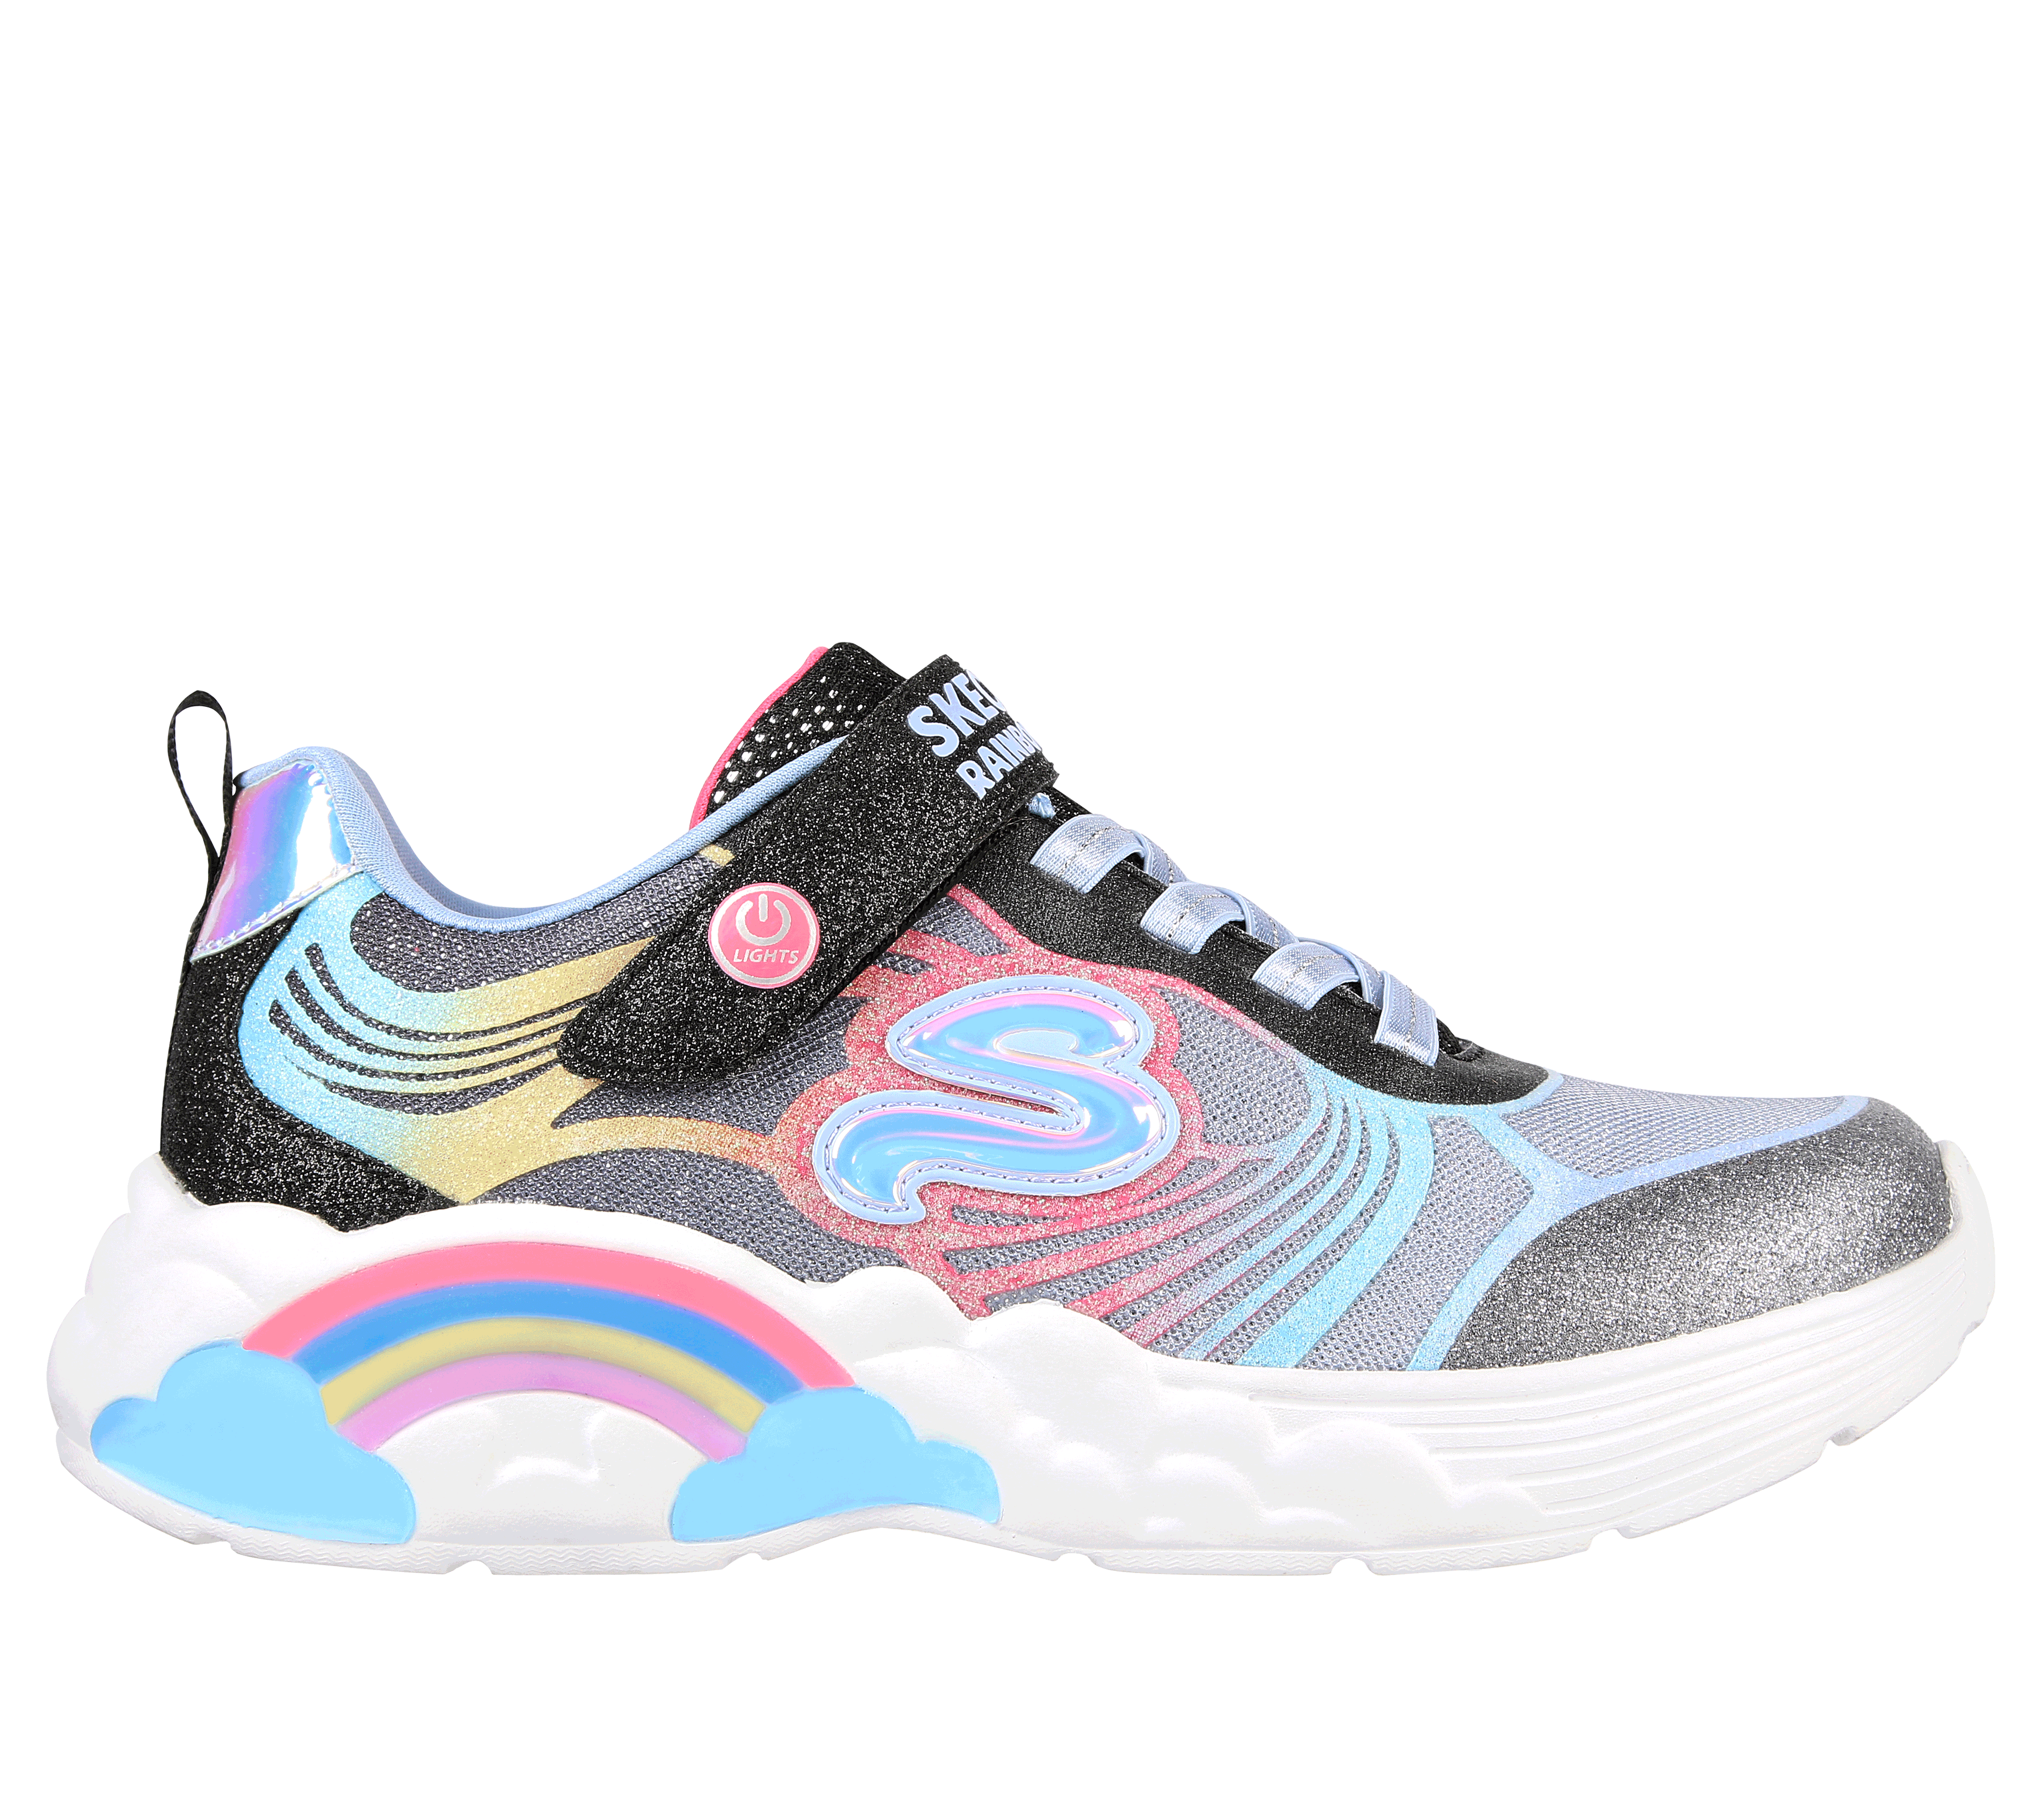 skechers rainbow tennis shoes